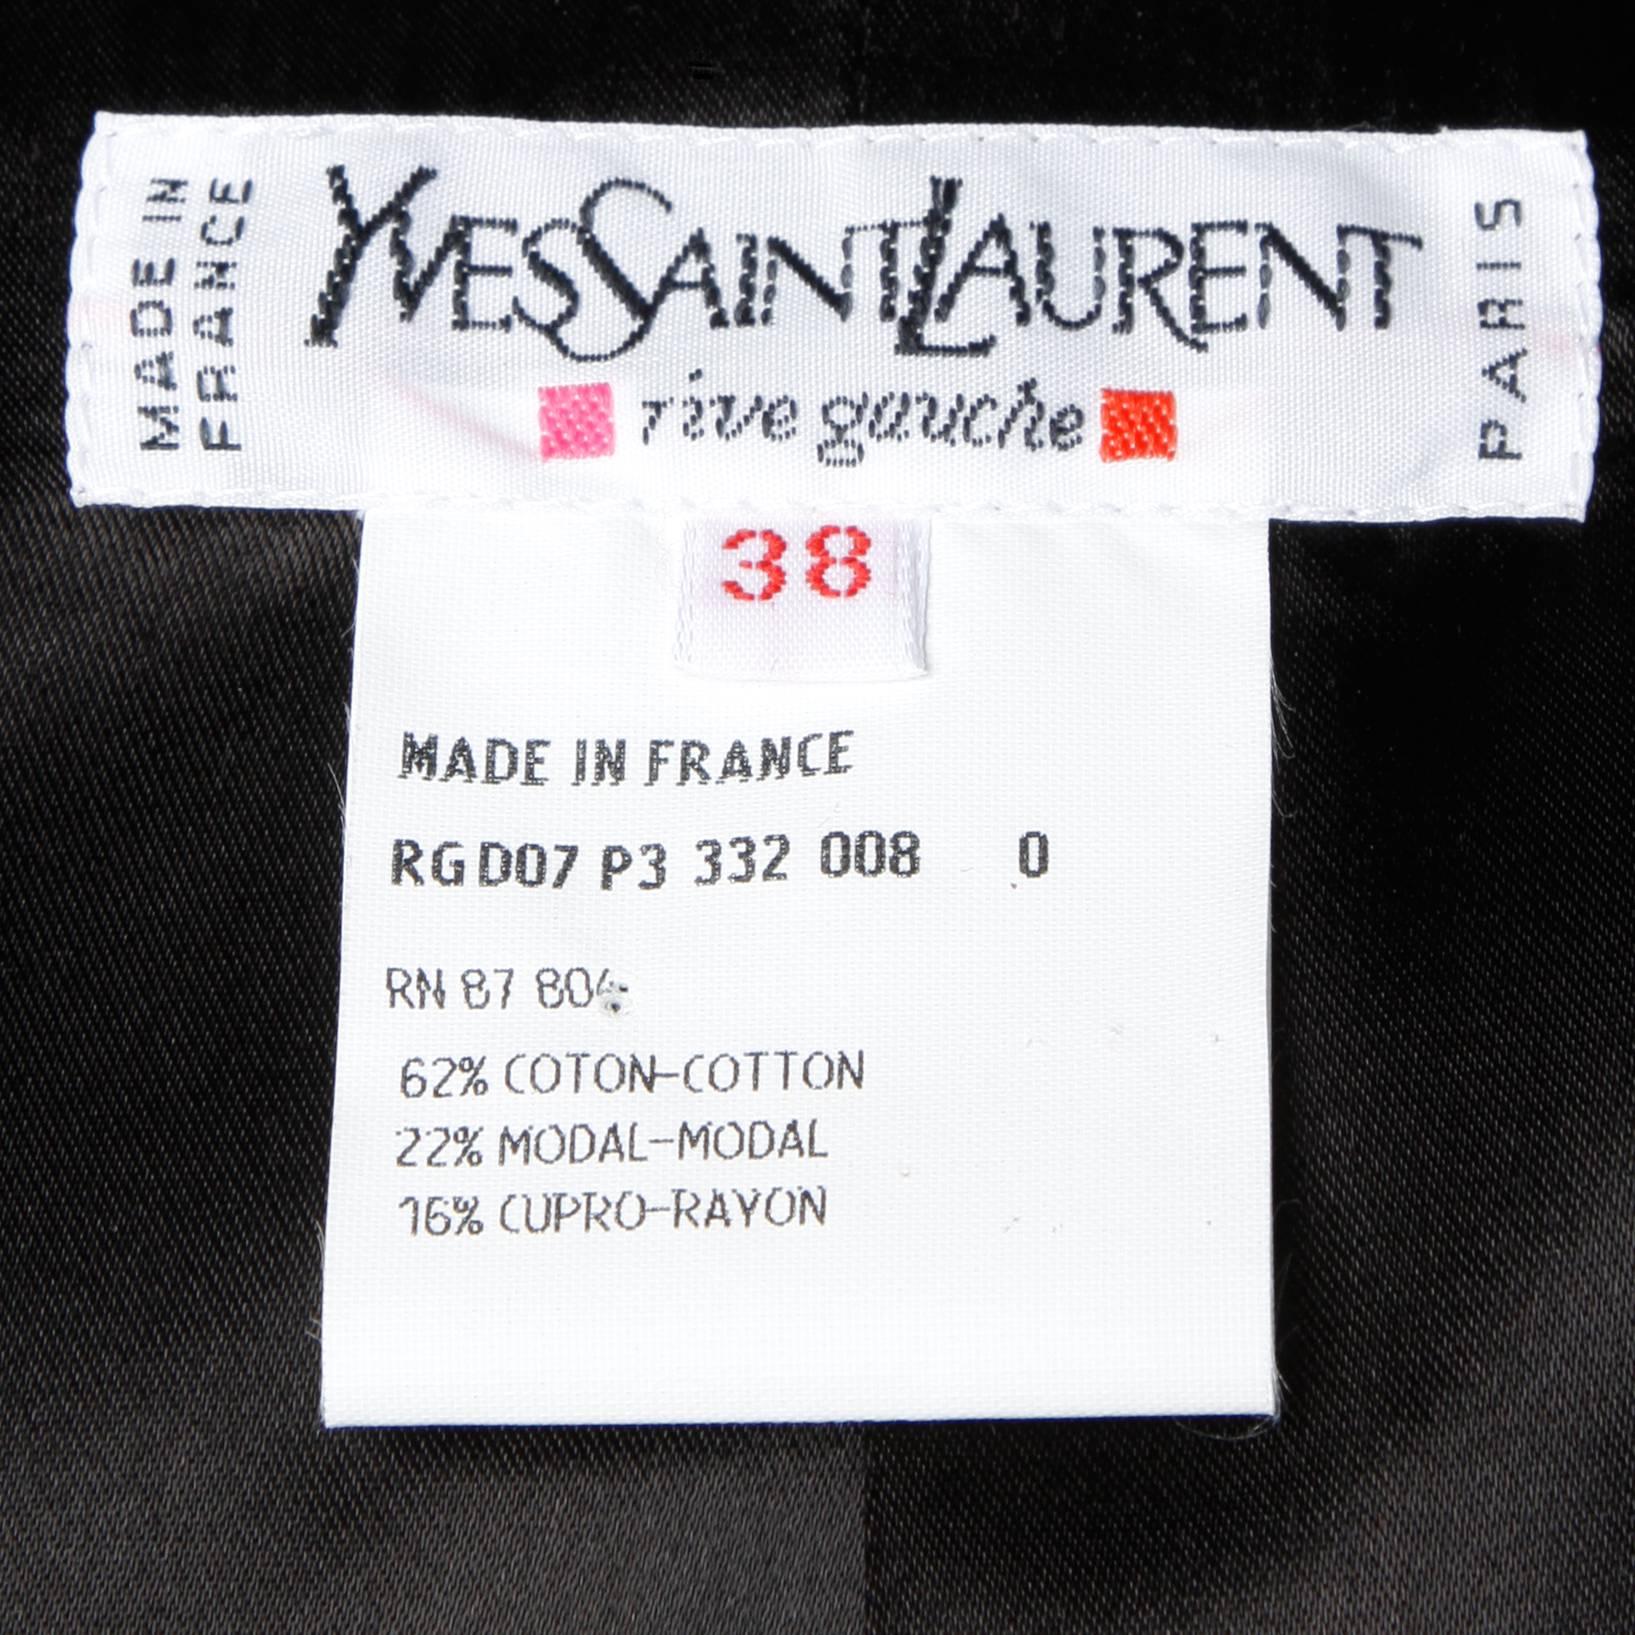 Beautiful deep burgundy velvet skirt suit by Yves Saint Laurent. Black trim and buttons.

Details:

Fully Lined
Jacket Front Pockets/ Skirt Side PocketsShoulder Pads Sewn Into Lining
Jacket Front Button Closure/ Skirt Side Zip and Button